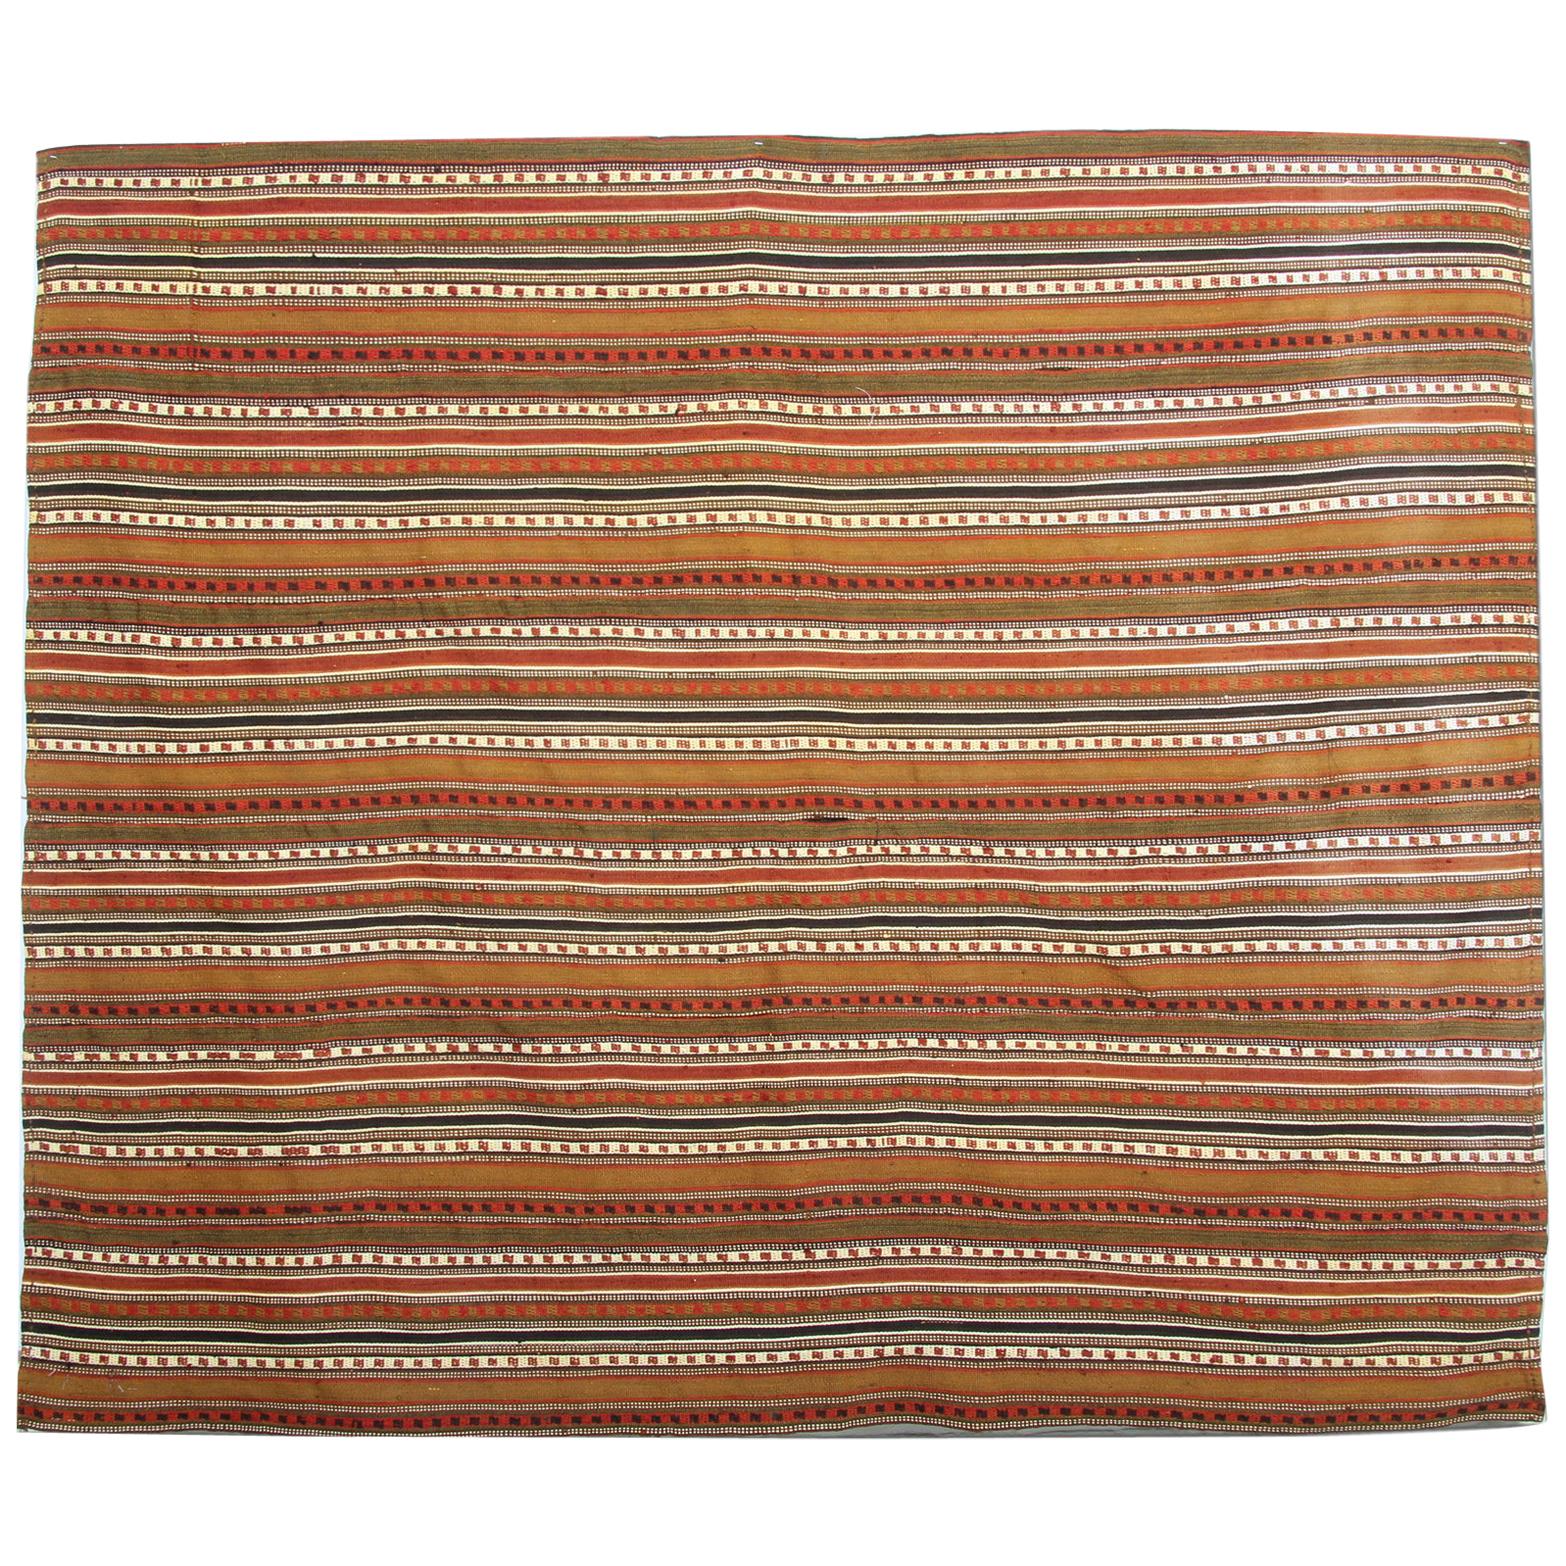 Antique Rugs Azerbaijan 'Jajim' Red Striped Handmade Flat-Woven Textile For Sale